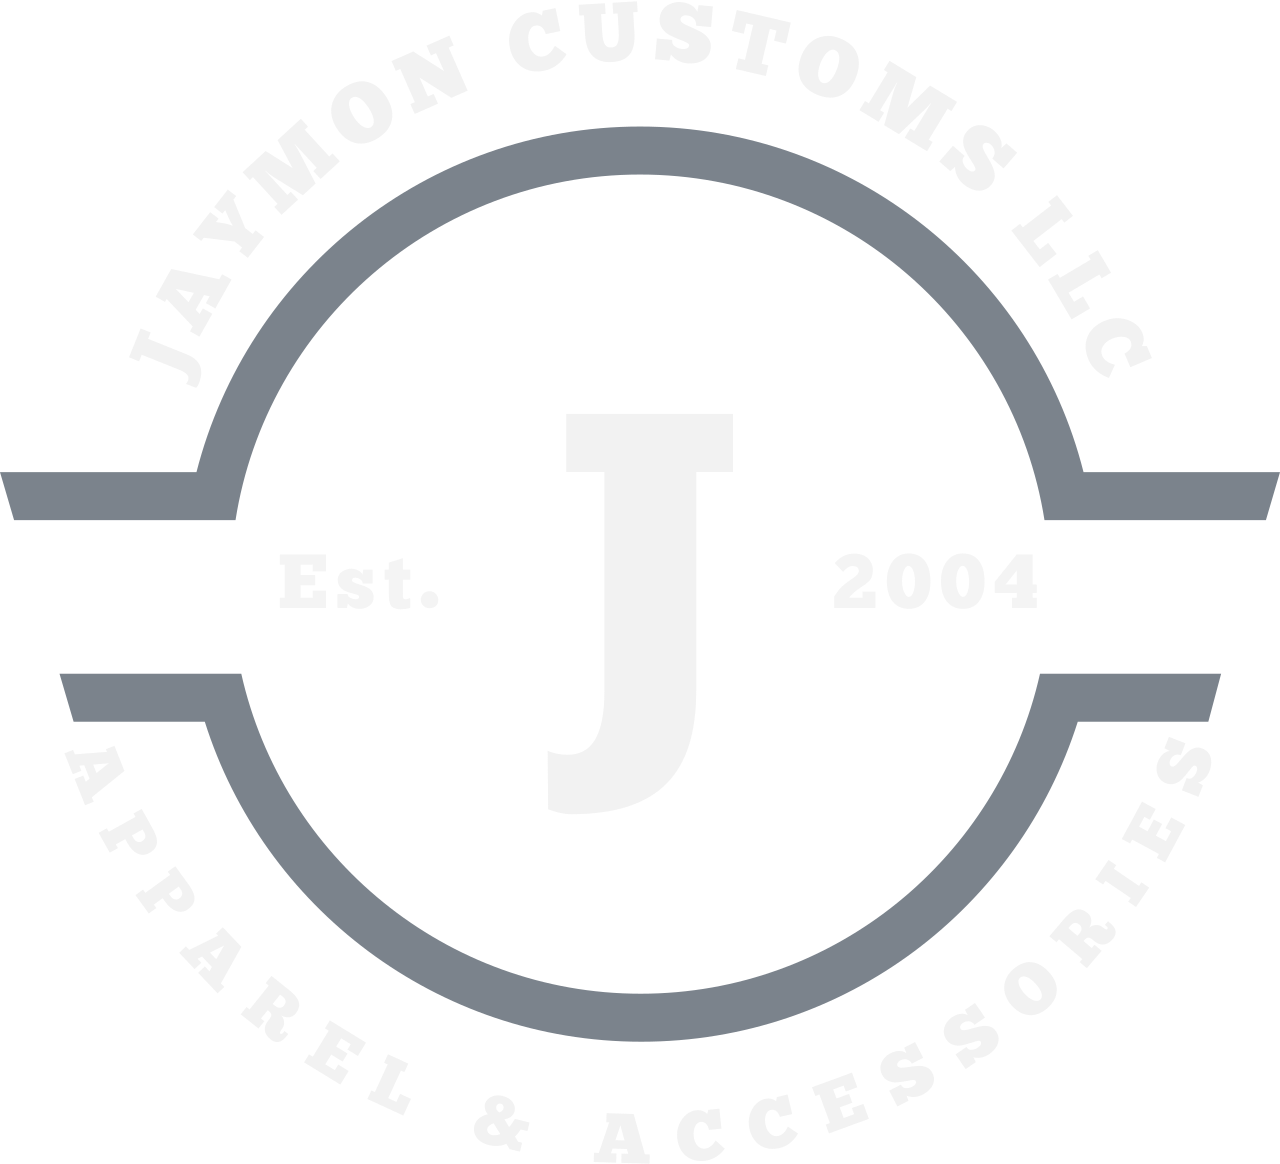 JAYMON CUSTOMS LLC's web page